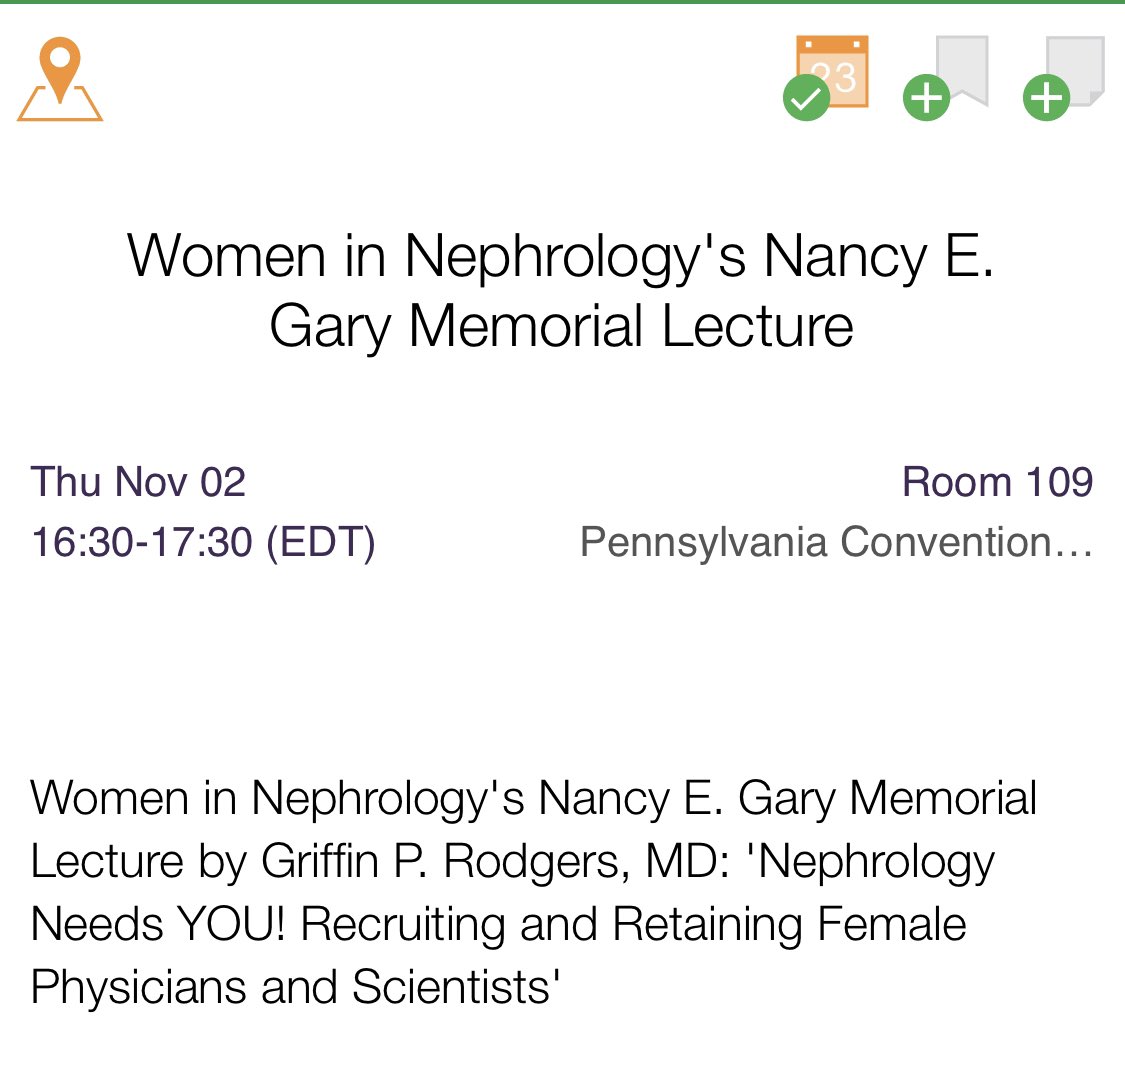 Nephrology Needs YOU!
Recruiting & Retaining Female Physicians & Scientists
#WomenInNephrology
#KidneyWk